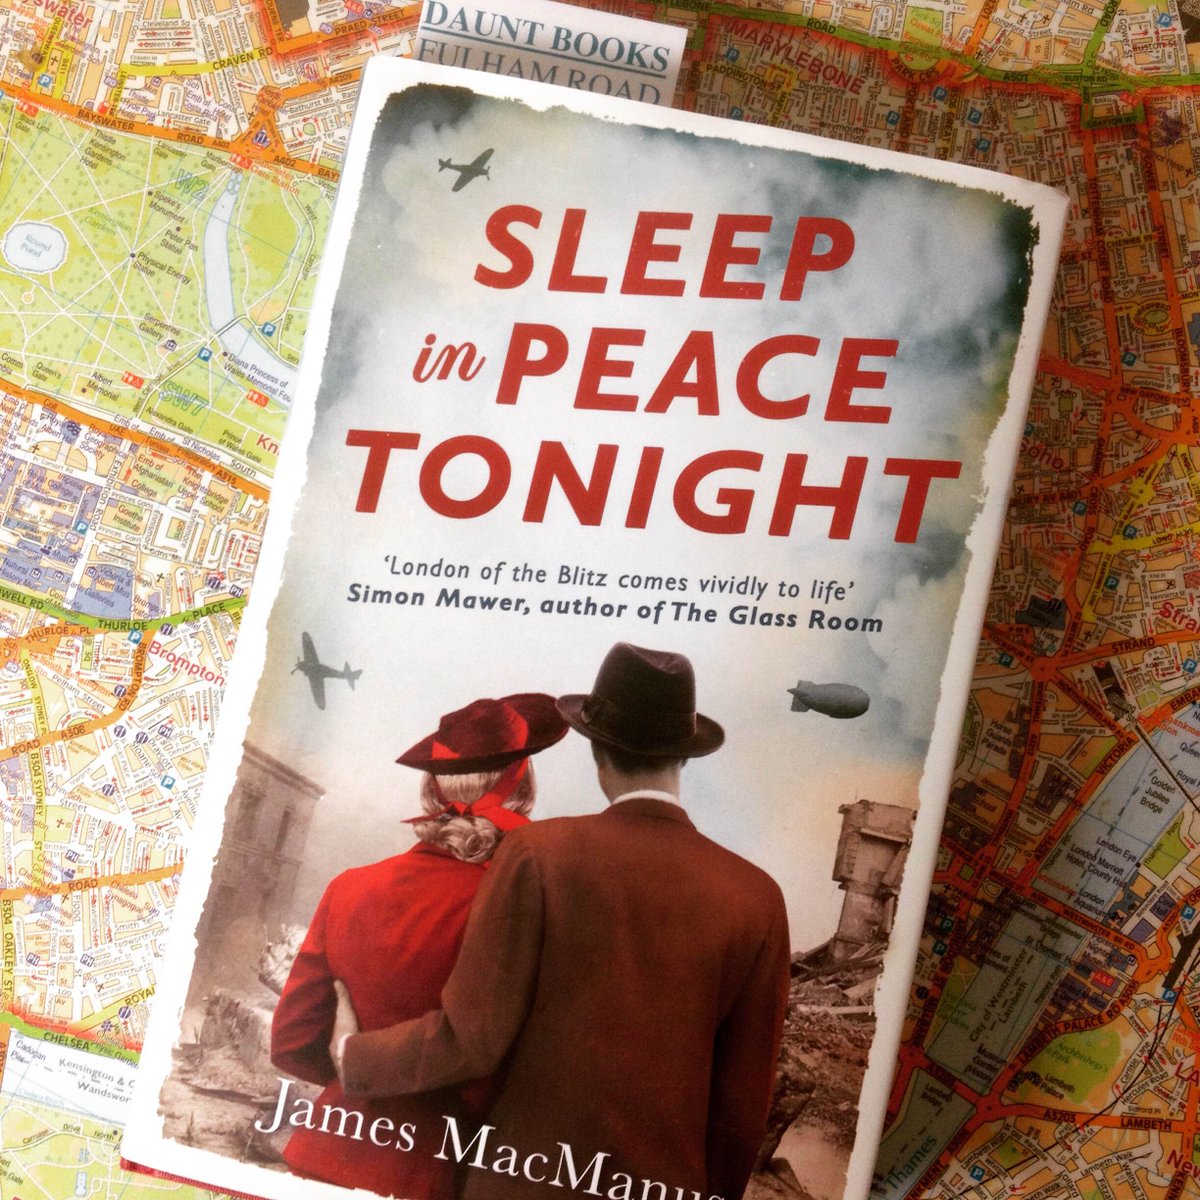 Countdown to James MacManus this Thursday at Daunt Books Fulham Road! Tickets £5 #jamesmacmanus #sleepinpeacetonight